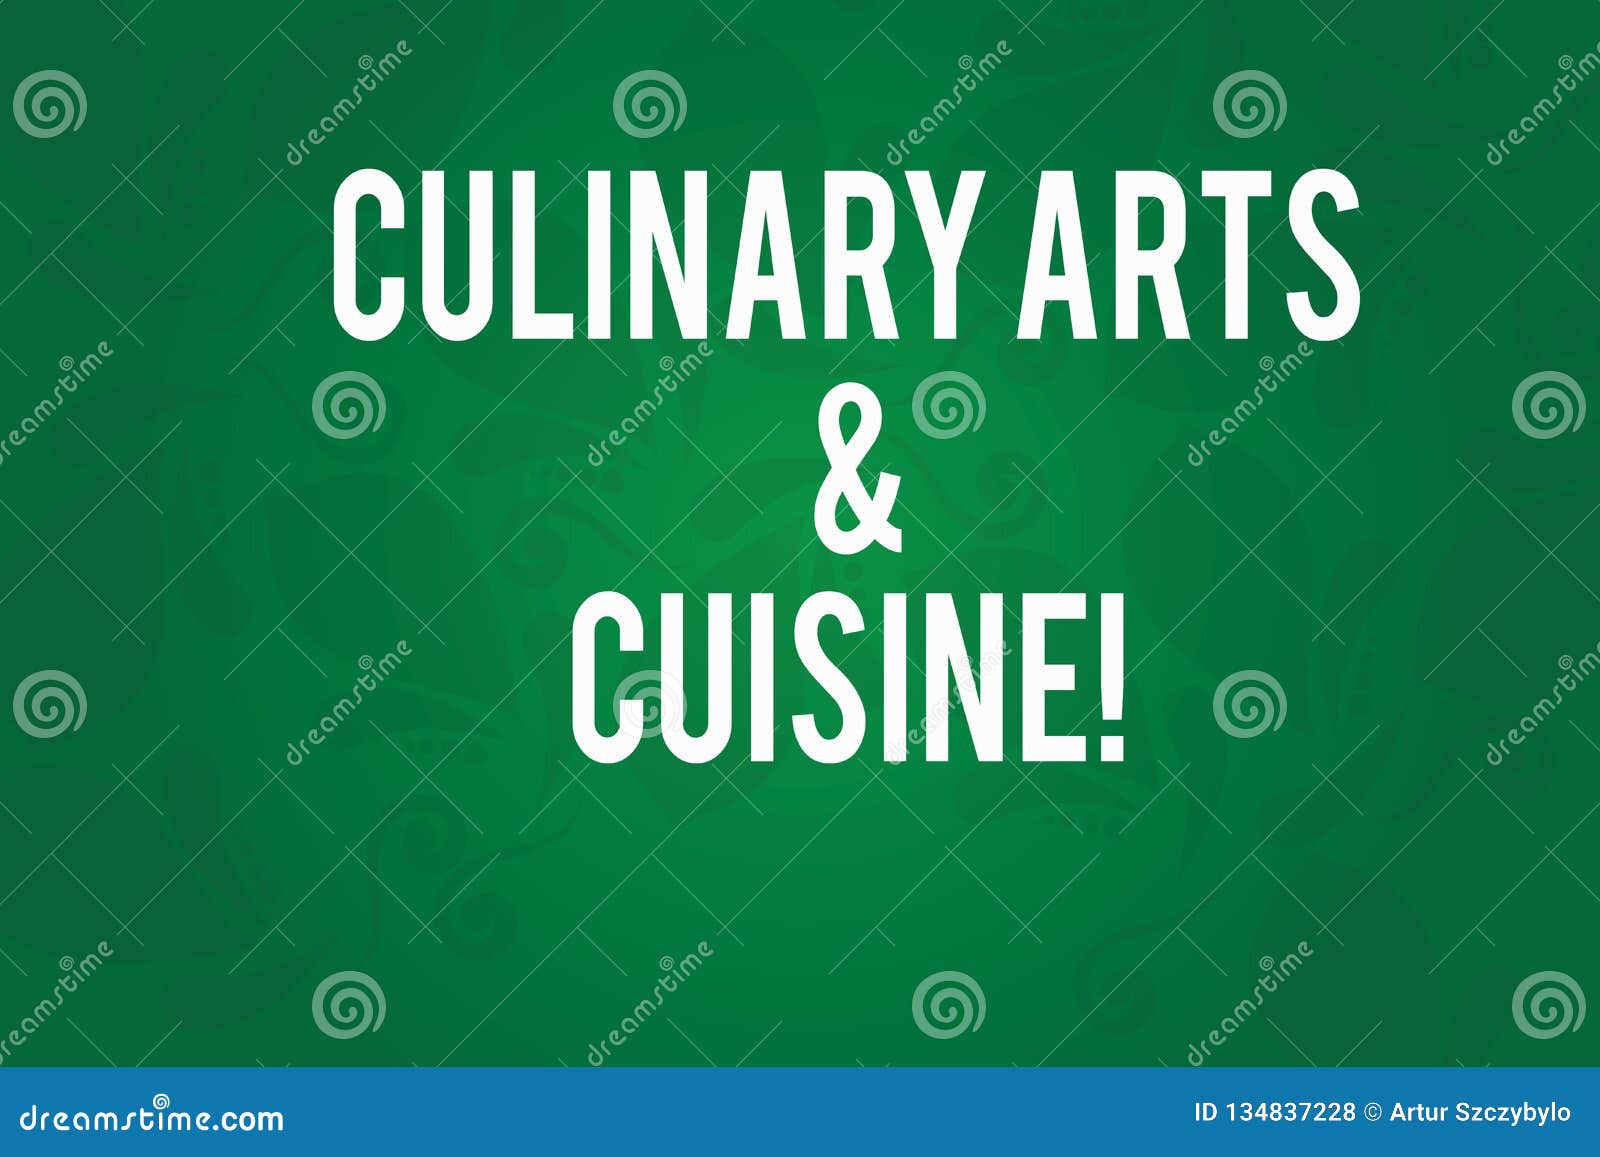 Culinary arts essay